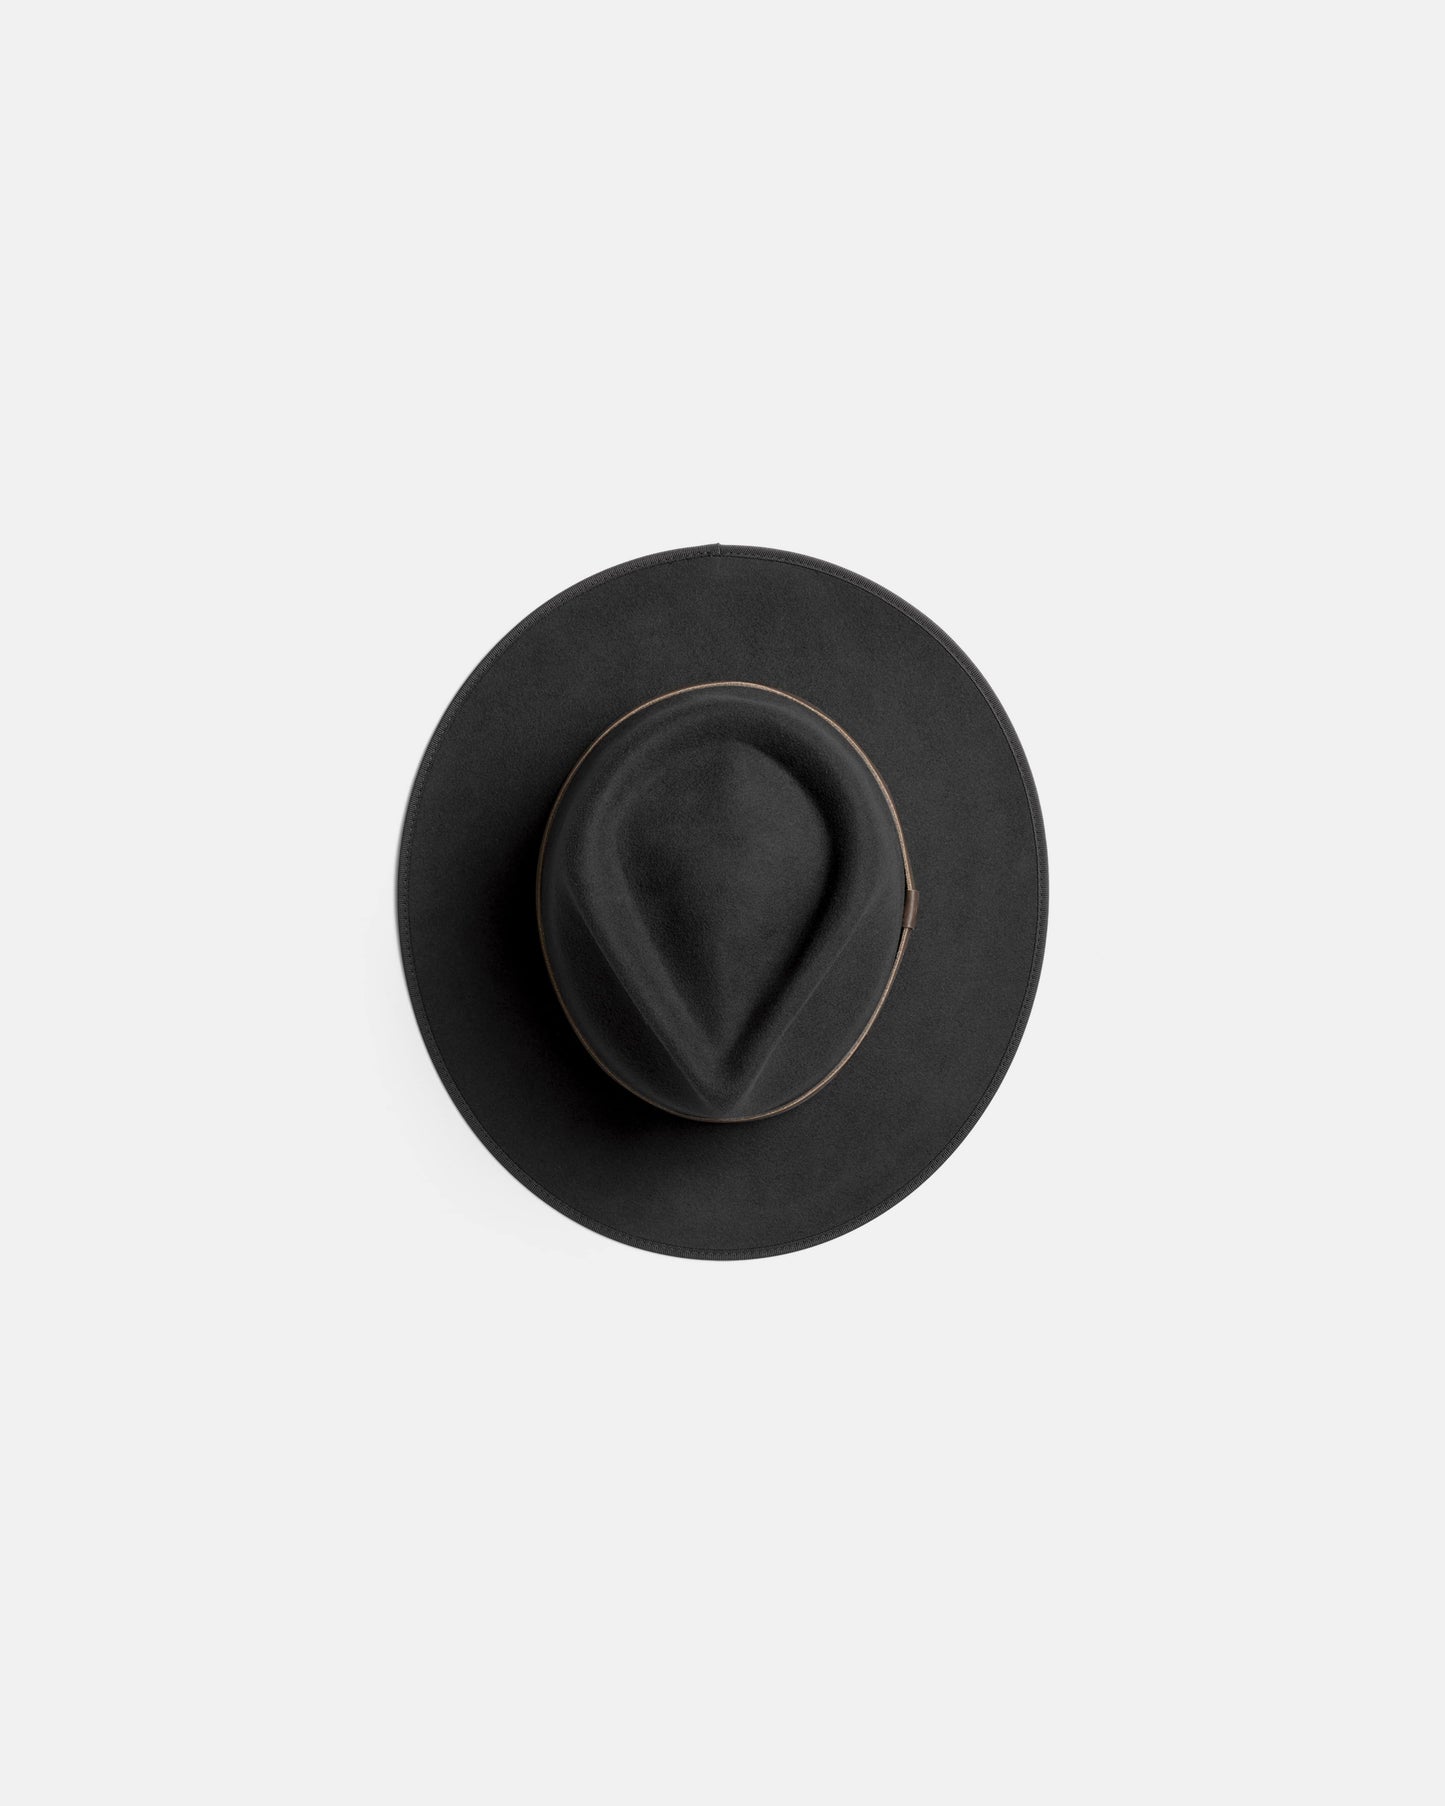 
                  
                    Calloway Black Hat
                  
                